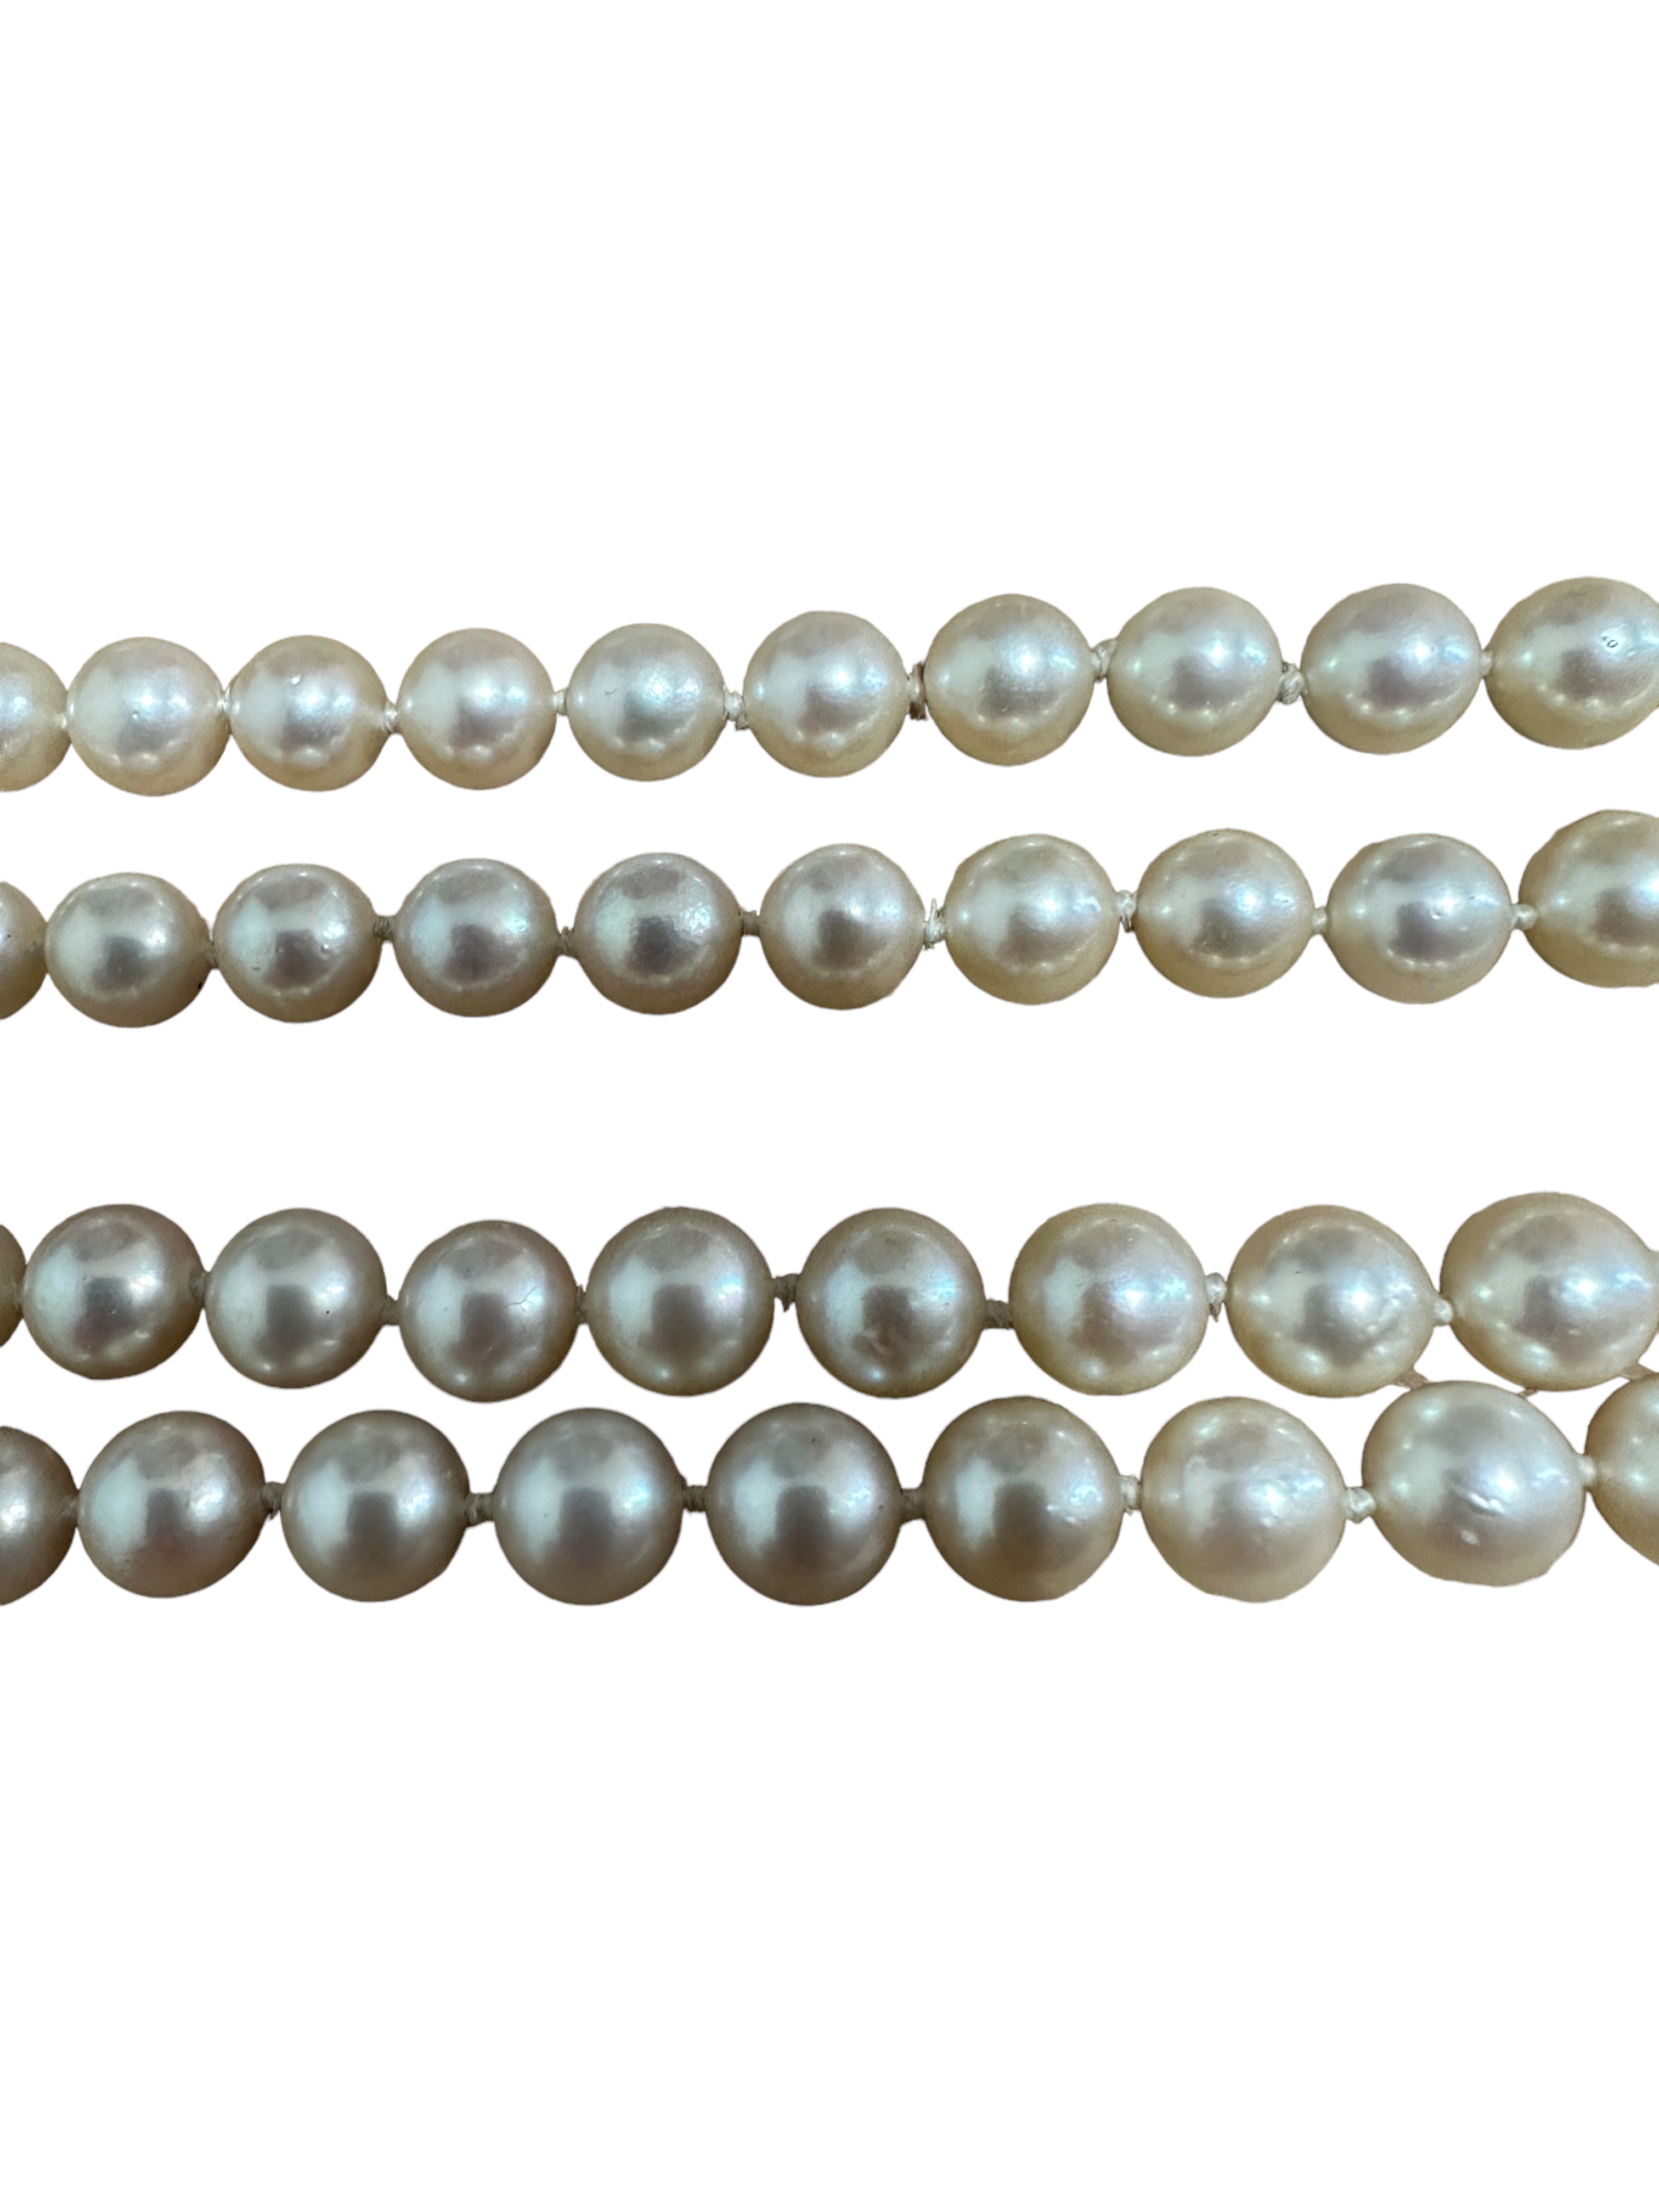 Large String of Vintage Pearls - 150cm in length - pearls average 7mm diameter. - Image 3 of 4